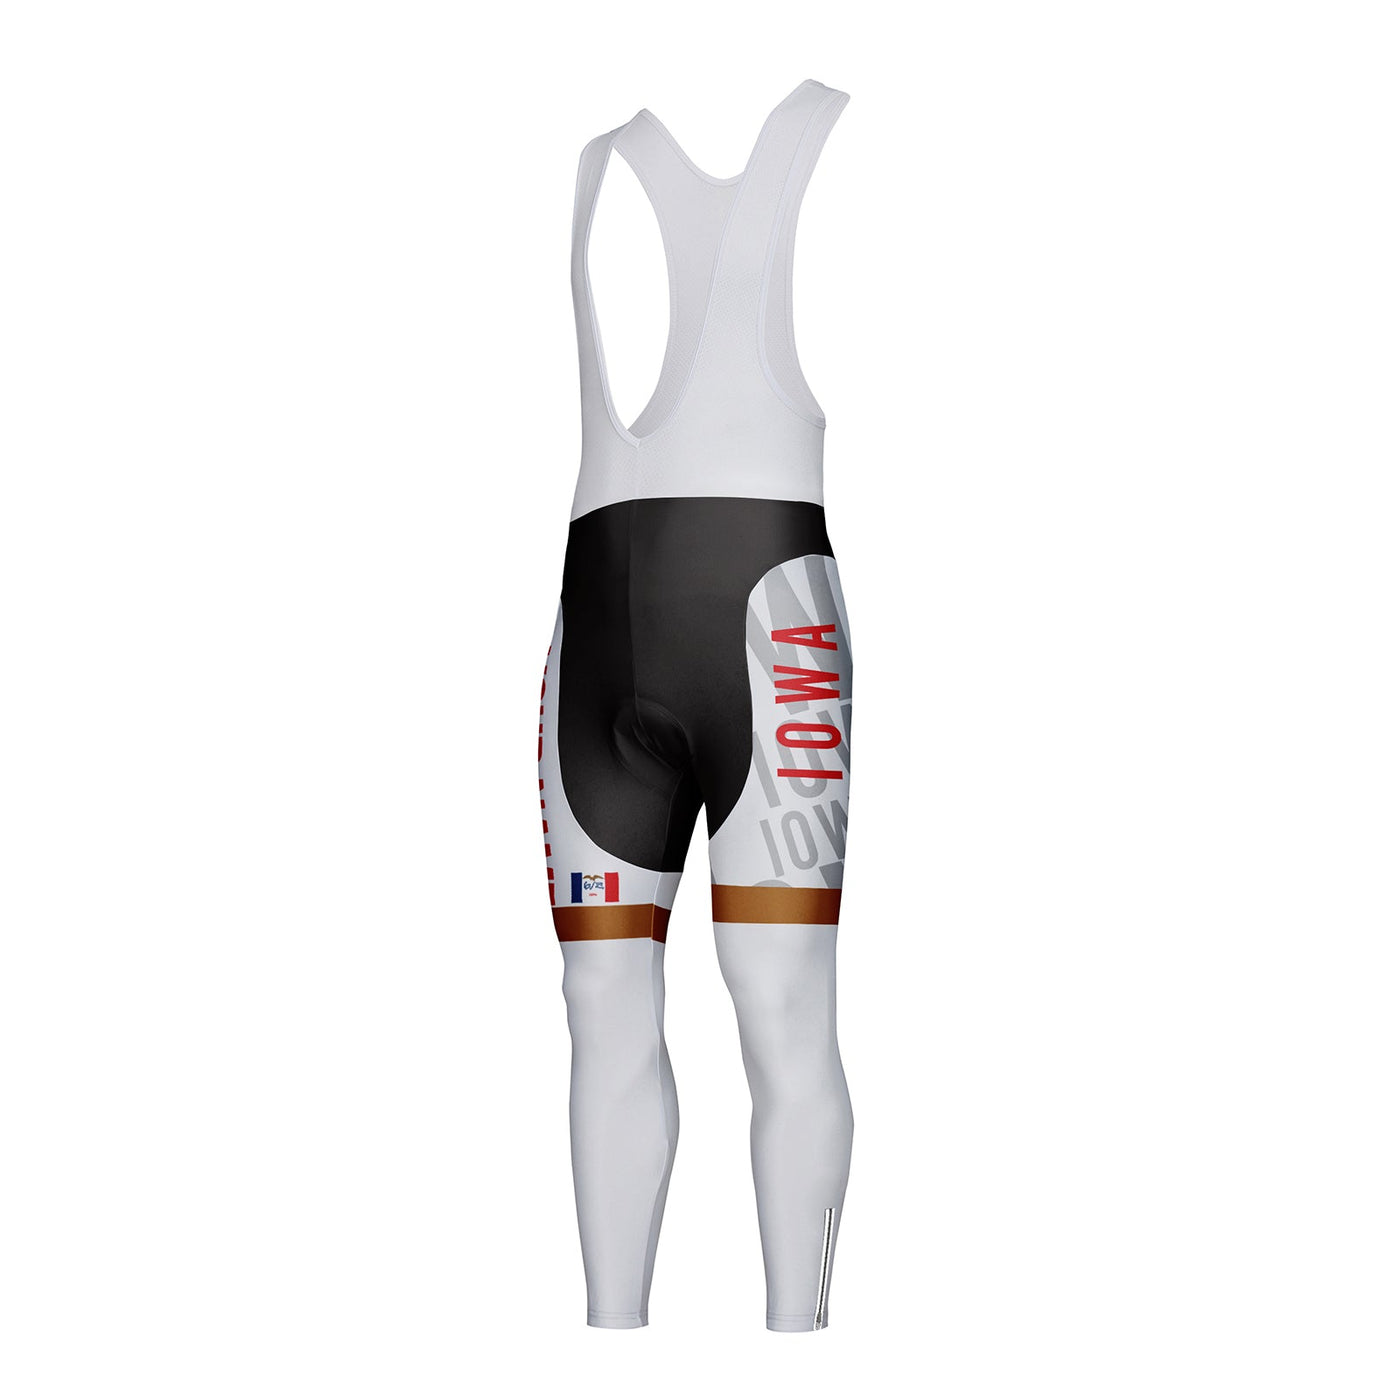 Customized Iowa Unisex Thermal Fleece Cycling Bib Tights Long Pants